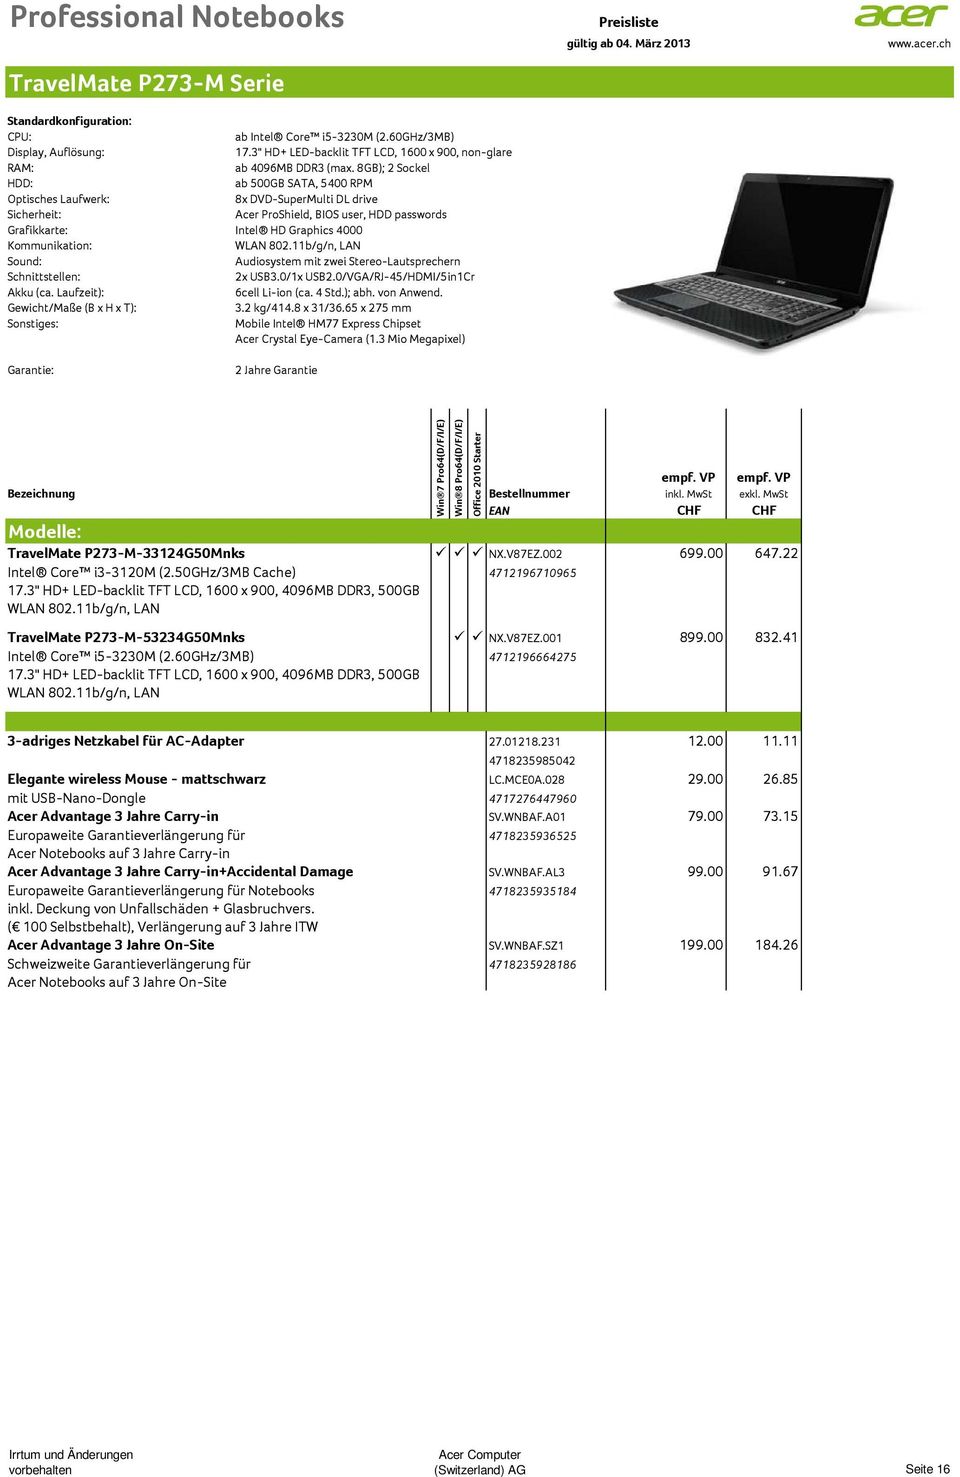 0/1x USB2.0/VGA/RJ-45/HDMI/5in1Cr 6cell Li-ion (ca. 4 Std.); abh. von Anwend. Gewicht/Maße (B x H x T): 3.2 kg/414.8 x 31/36.65 x 275 mm Acer Crystal Eye-Camera (1.